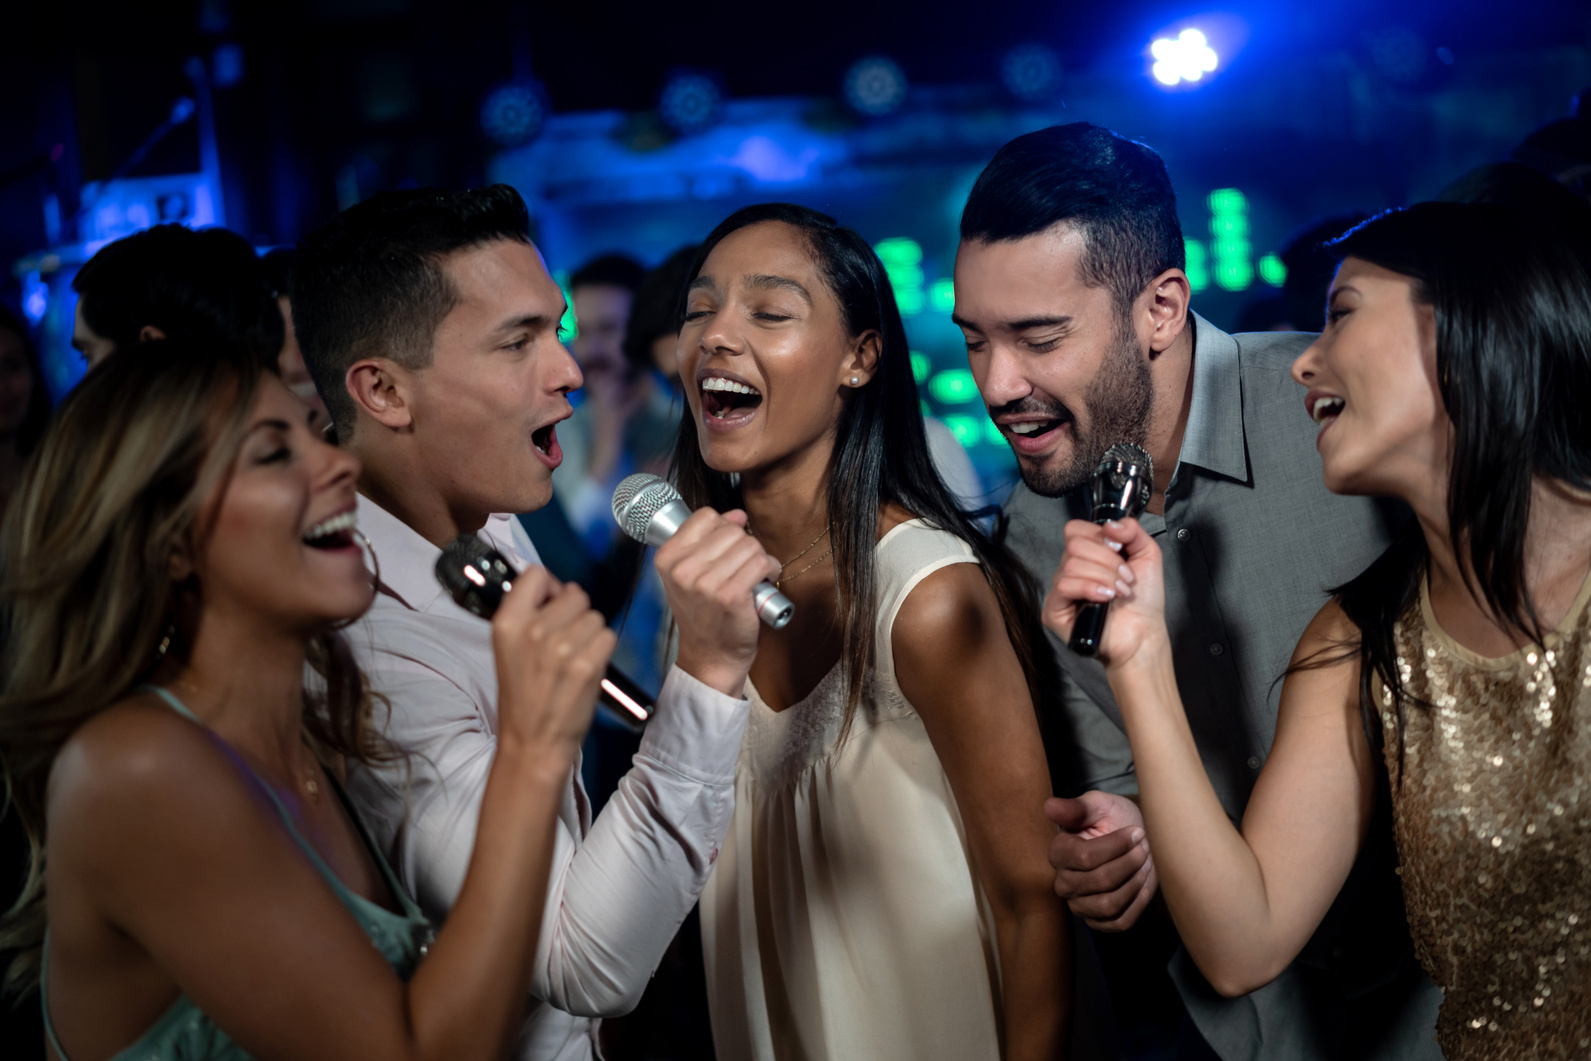 Group of people singing on karaoke night at a bar